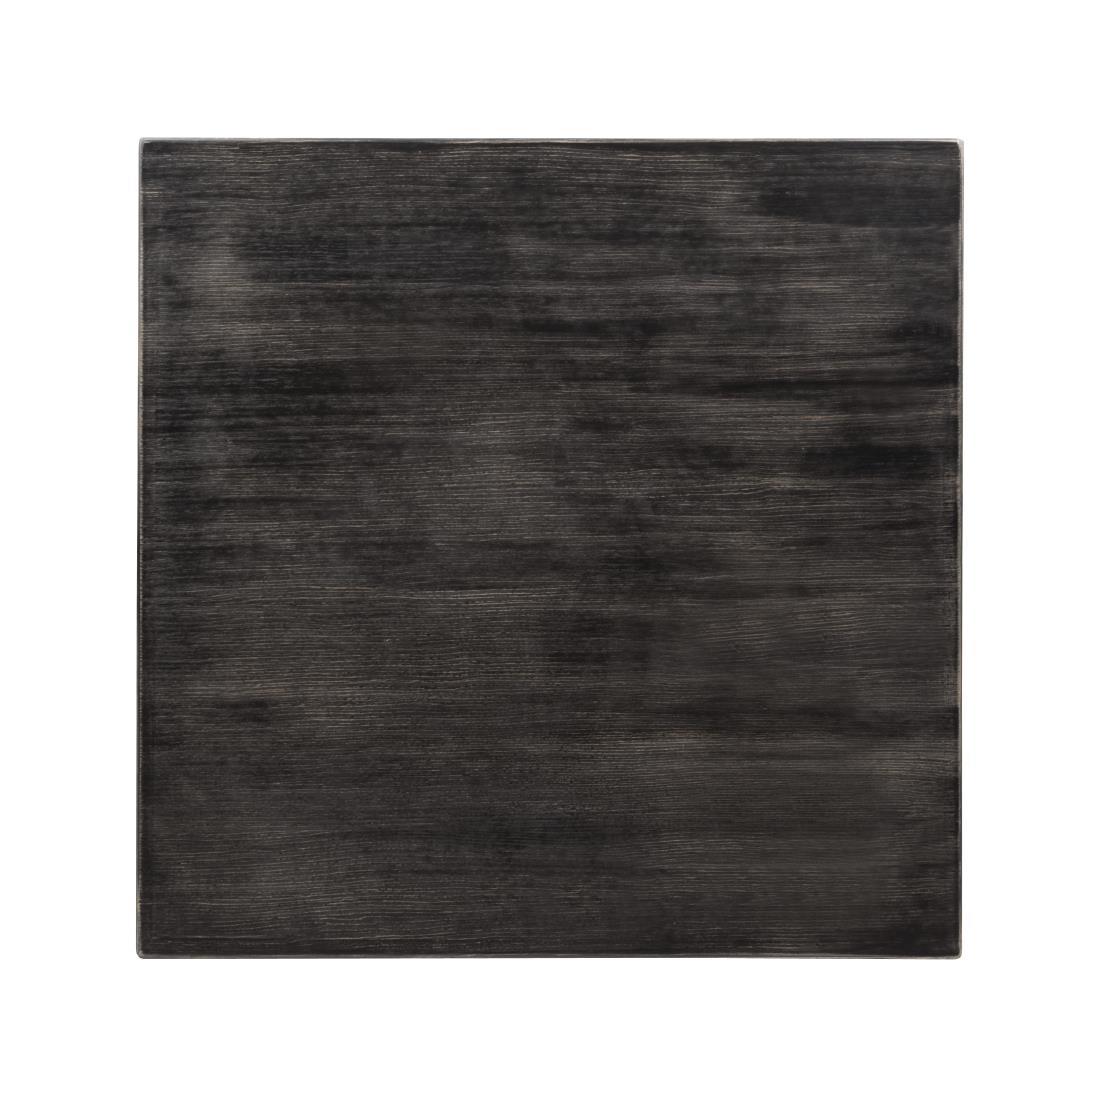 Bolero Pre-drilled Square Table Top Vintage Black 700mm - CY969  - 1